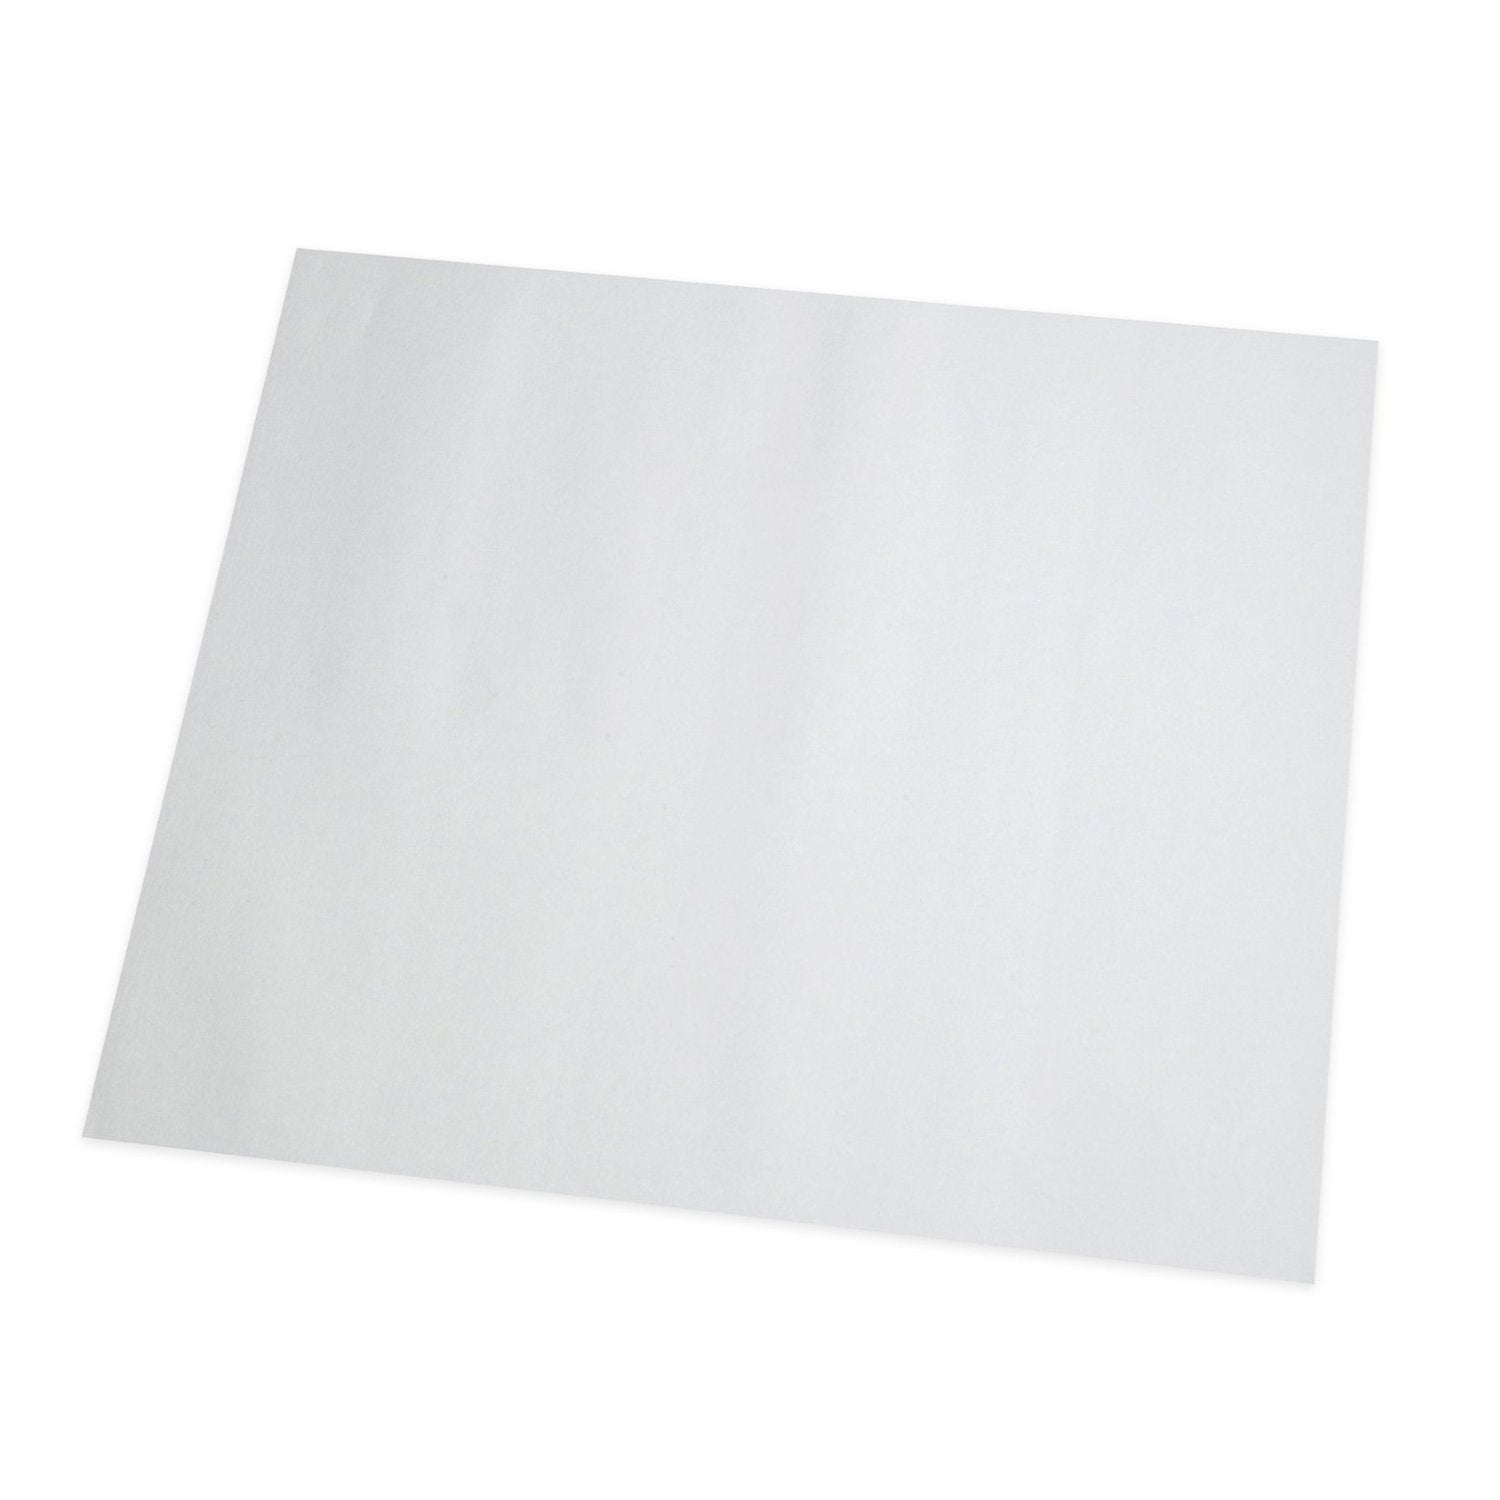 Whatman 1003-917 Filter Sheets, 460 x 570mm, Grade 3, 100/pk (PN:1003-917)